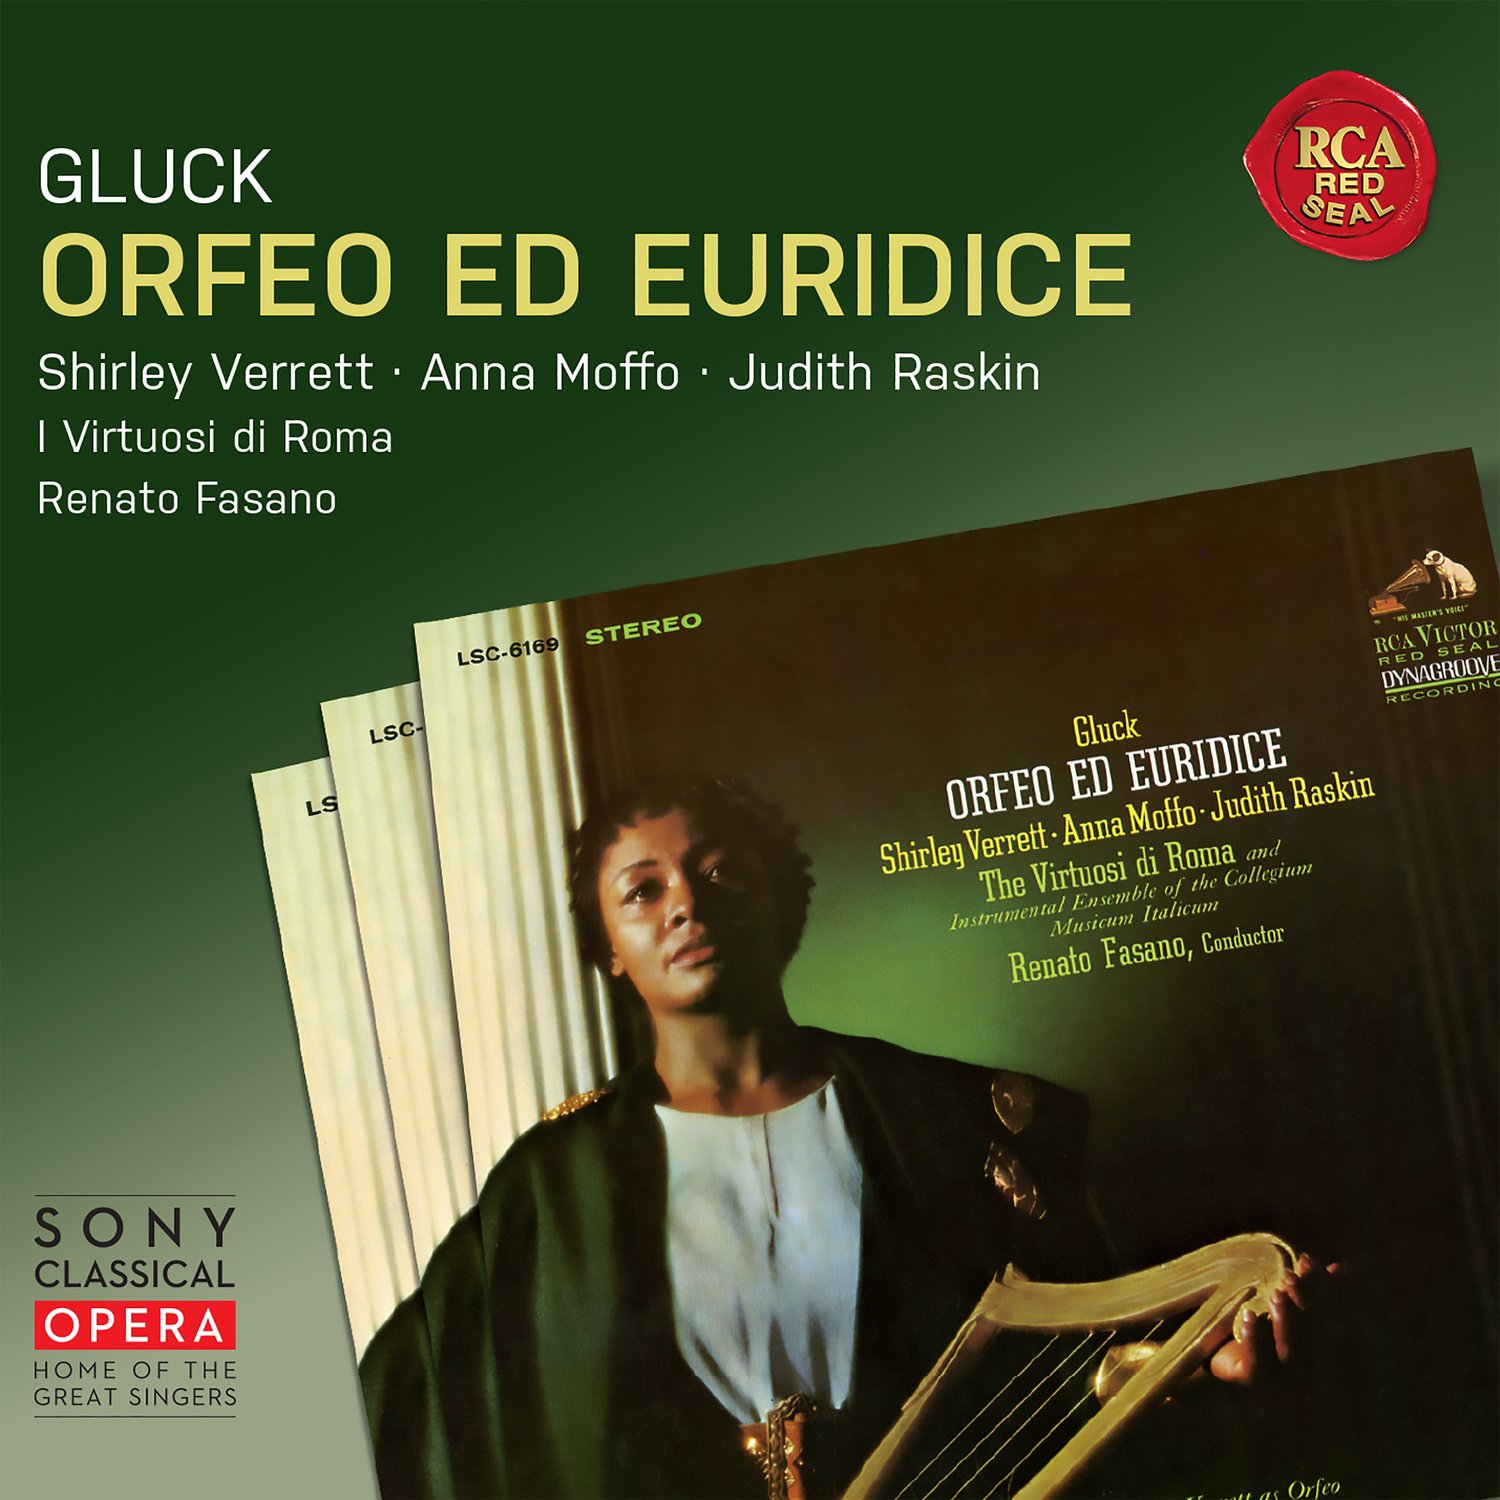 Gluck: Orfeo ed Euridice | Shirley Verrett, Anna Moffo, Judith Raskin